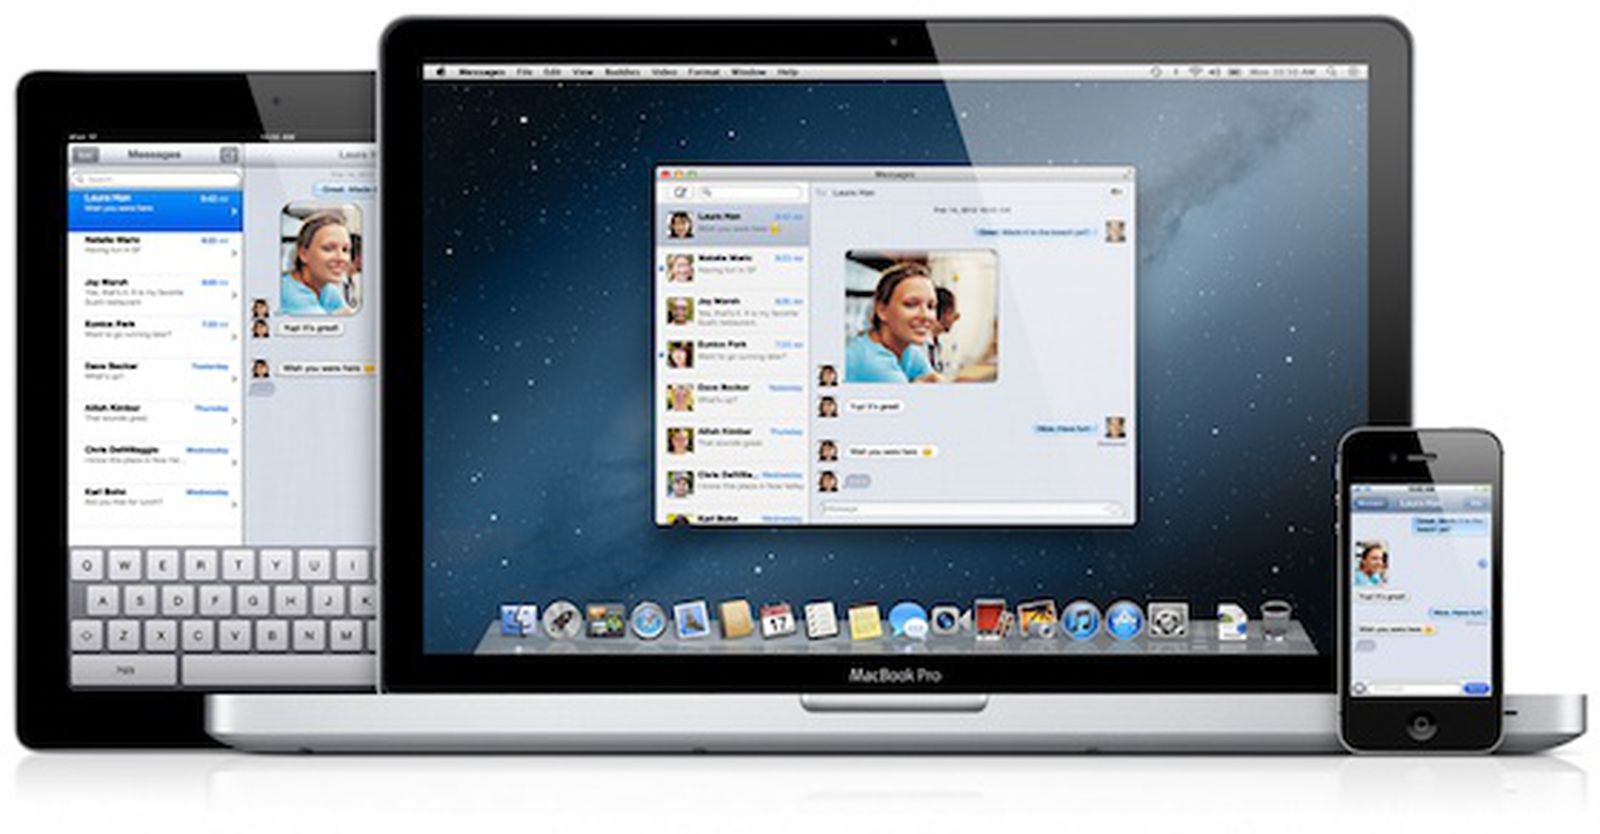 macbook os x version 10.8.5